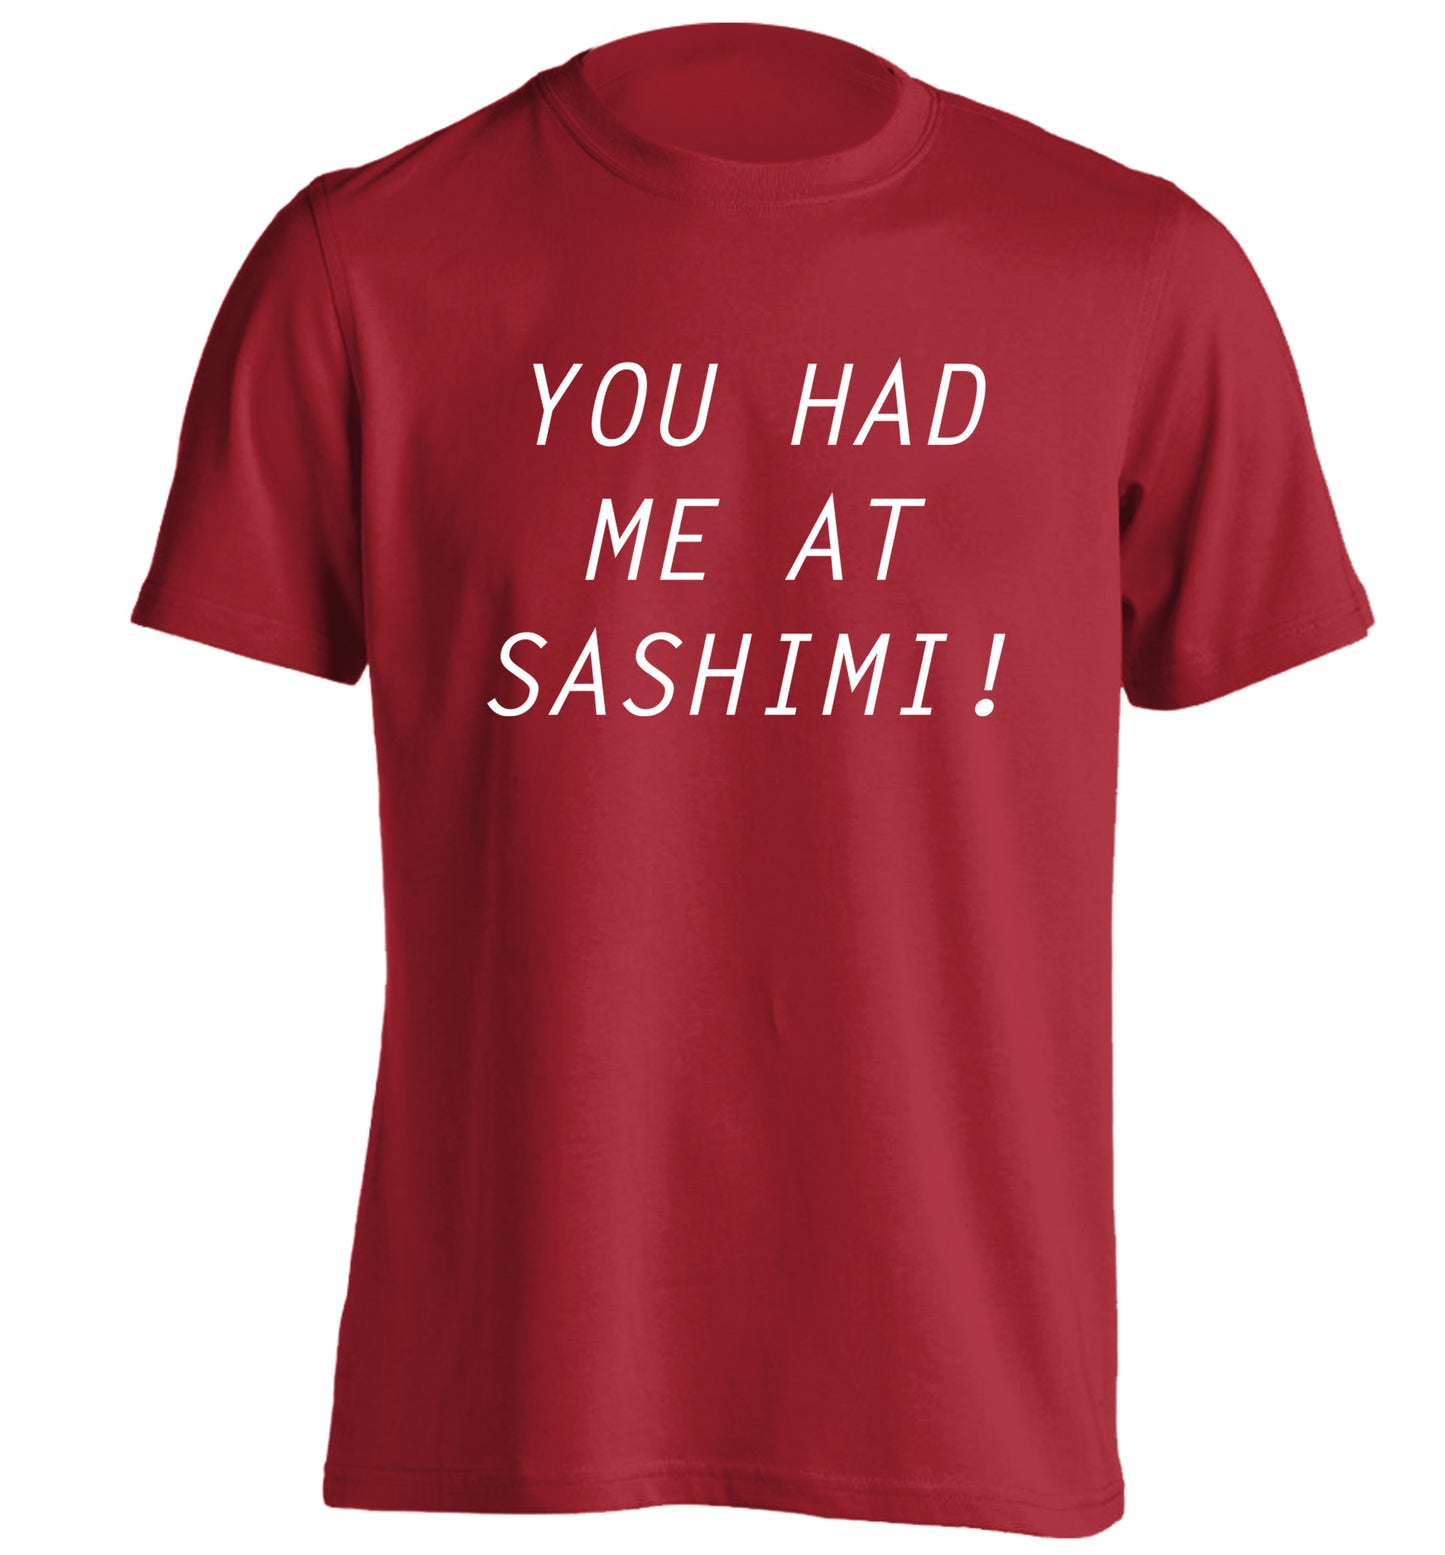 You had me at sashimi adults unisex red Tshirt 2XL